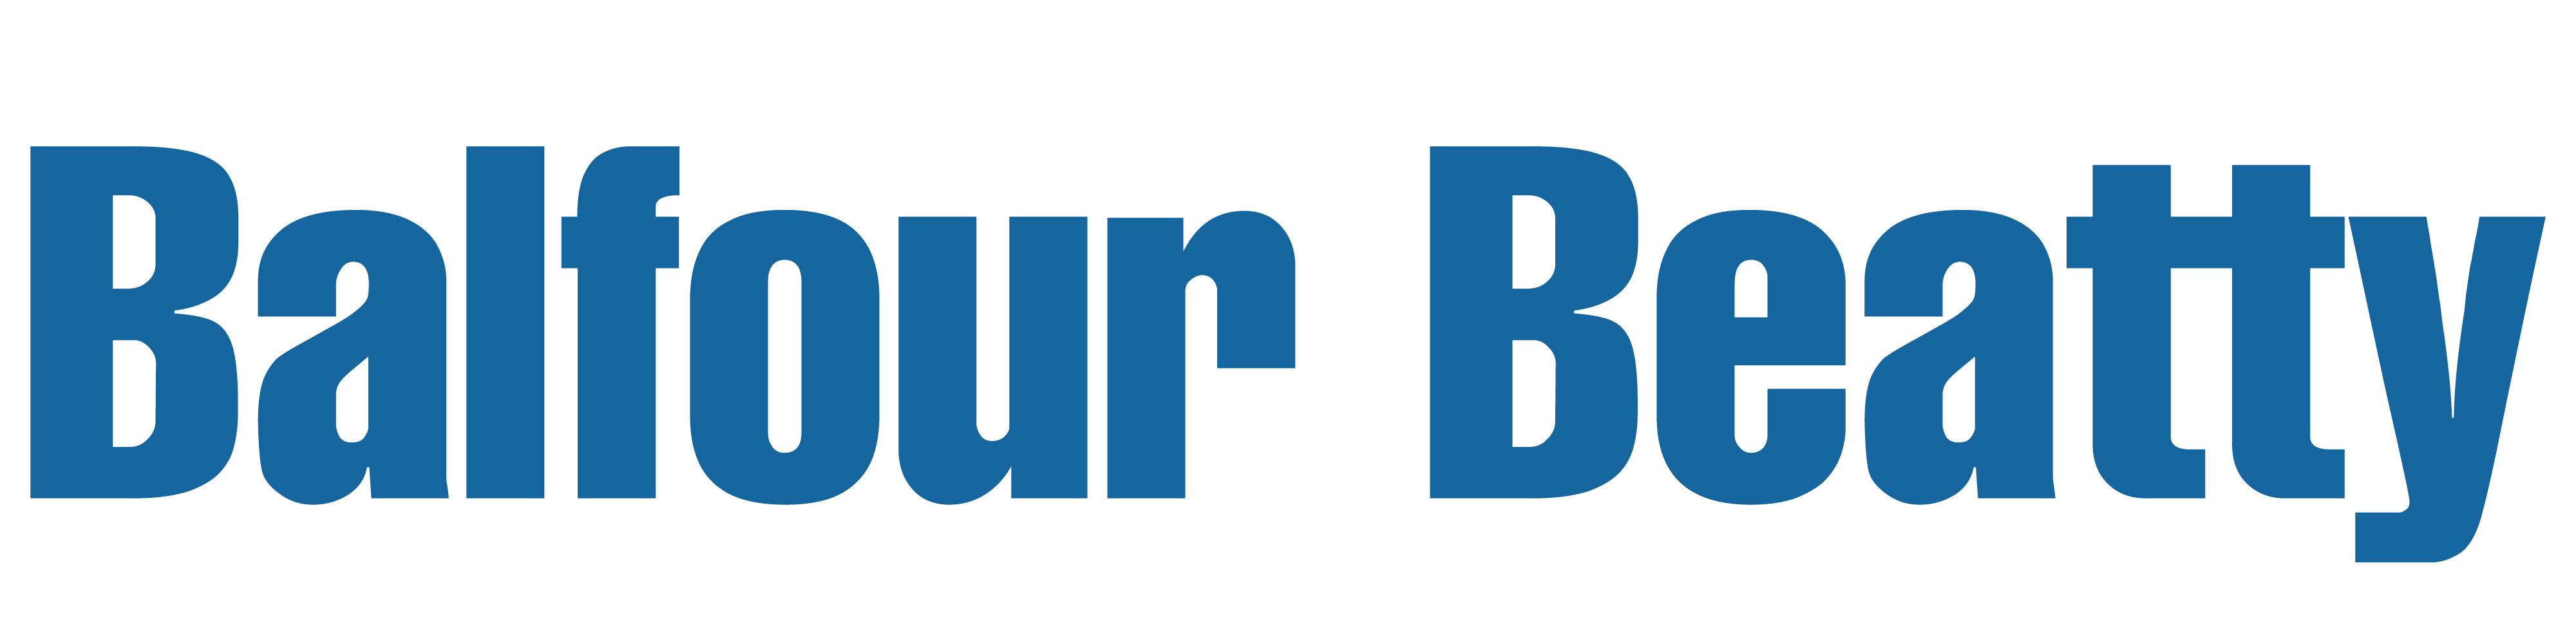 Balfour_Beatty_logo